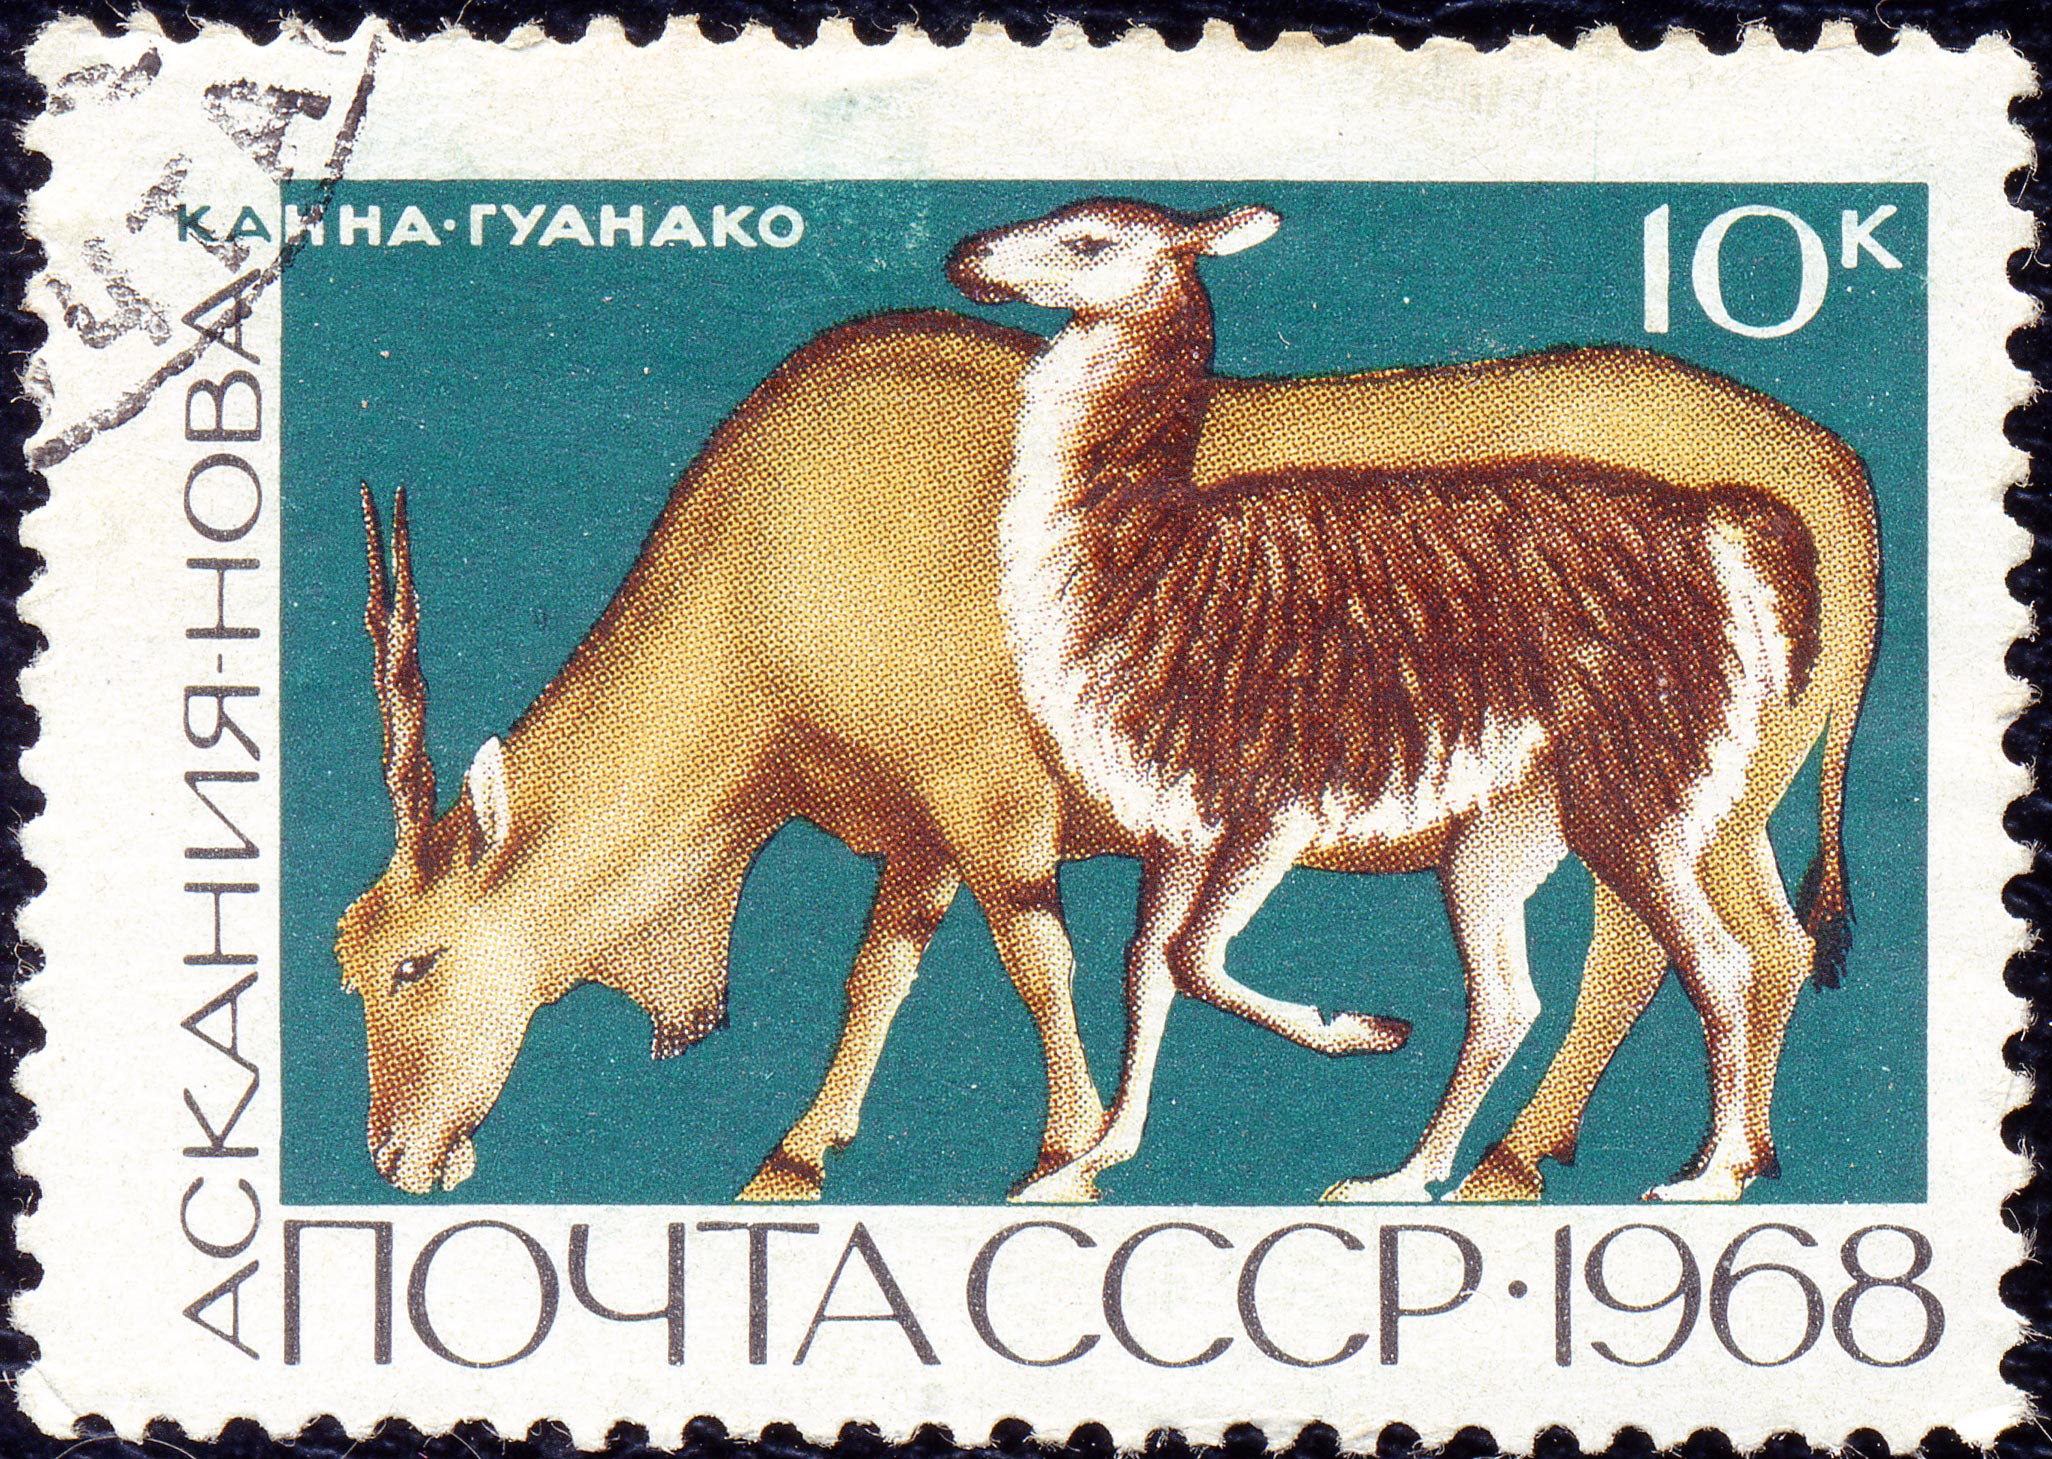 The Soviet Union 1968 CPA 3679 stamp (Eland and Guanaco (Askania-Nova)) cancelled light